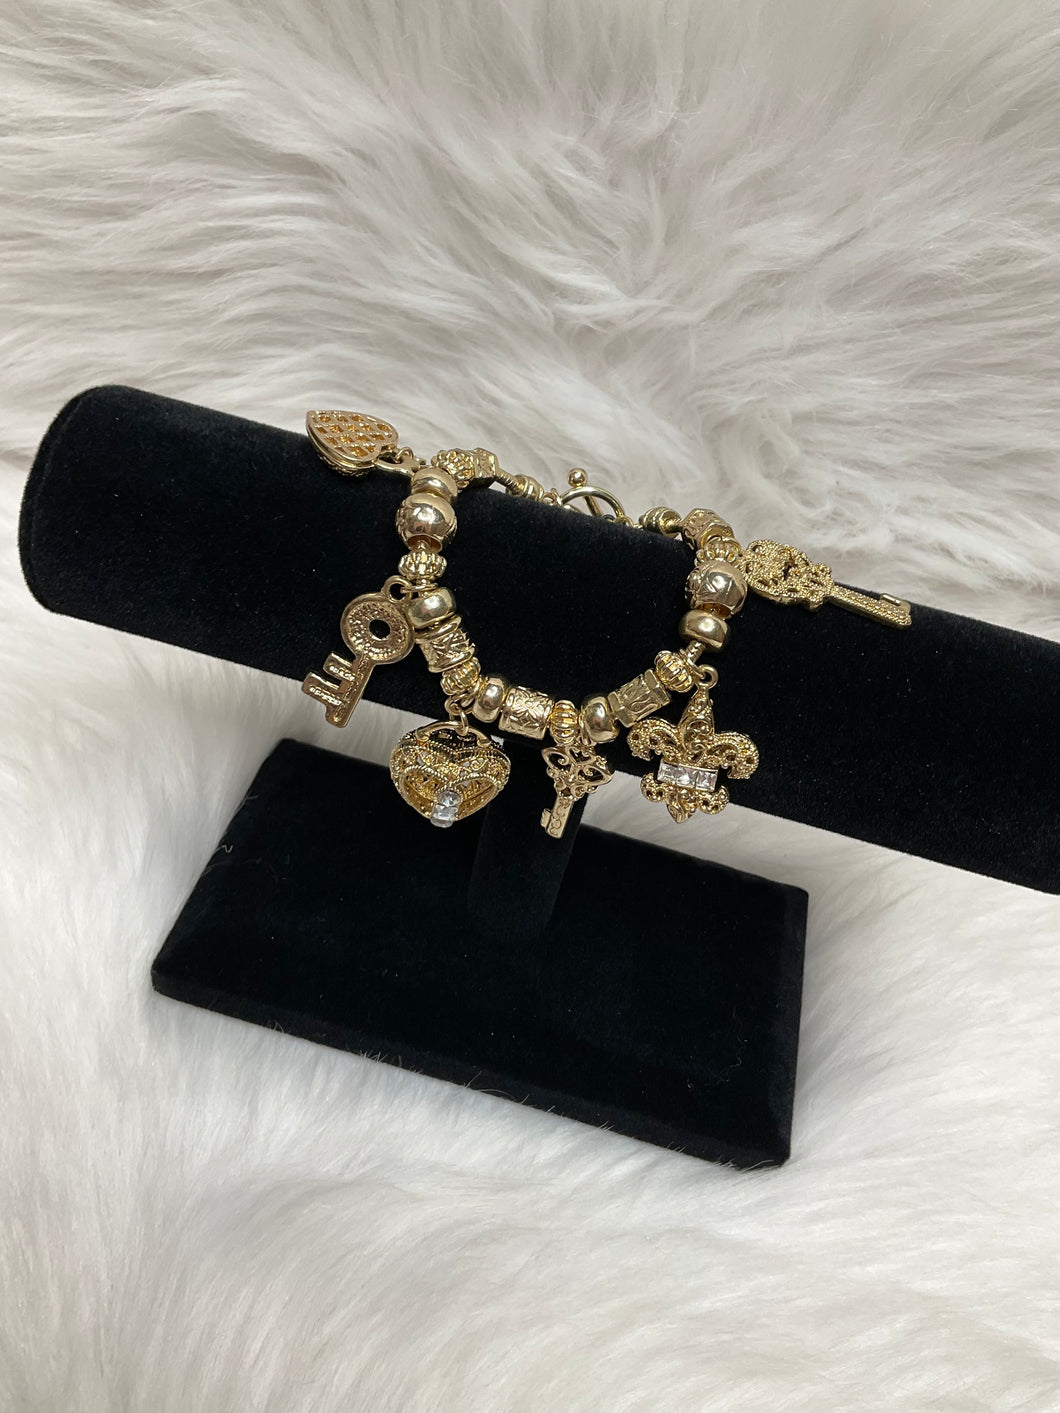 Traci Lynn “High Maint Gold” Bracelet